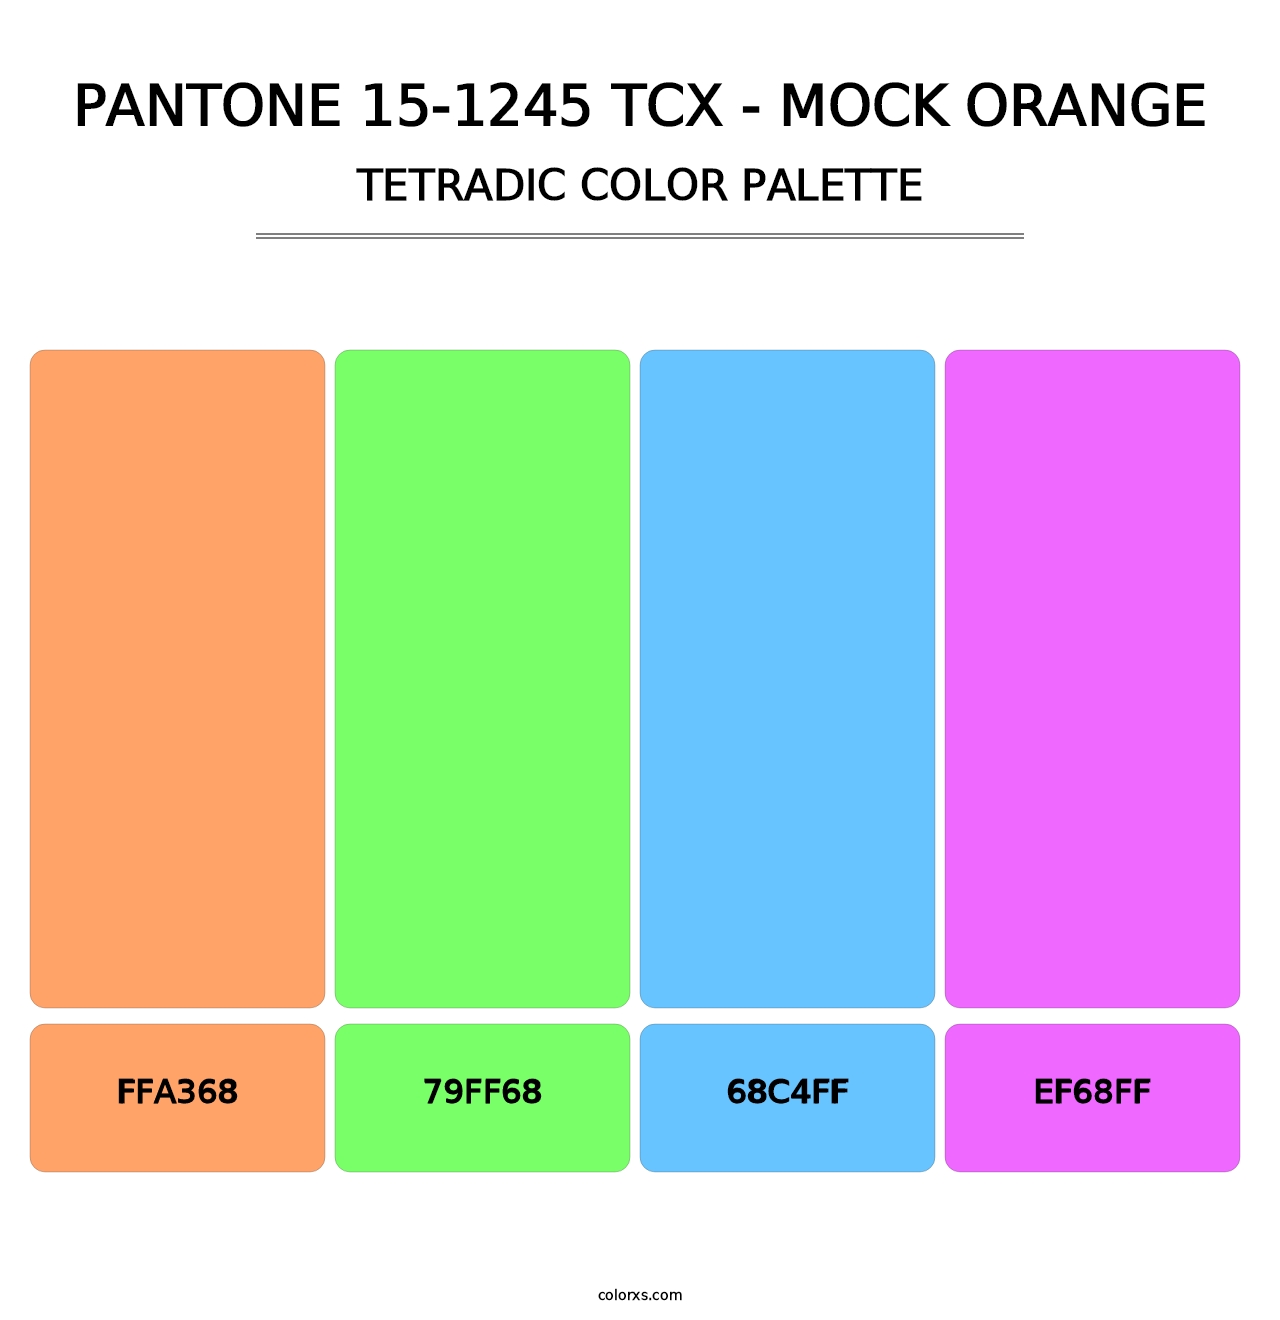 PANTONE 15-1245 TCX - Mock Orange - Tetradic Color Palette